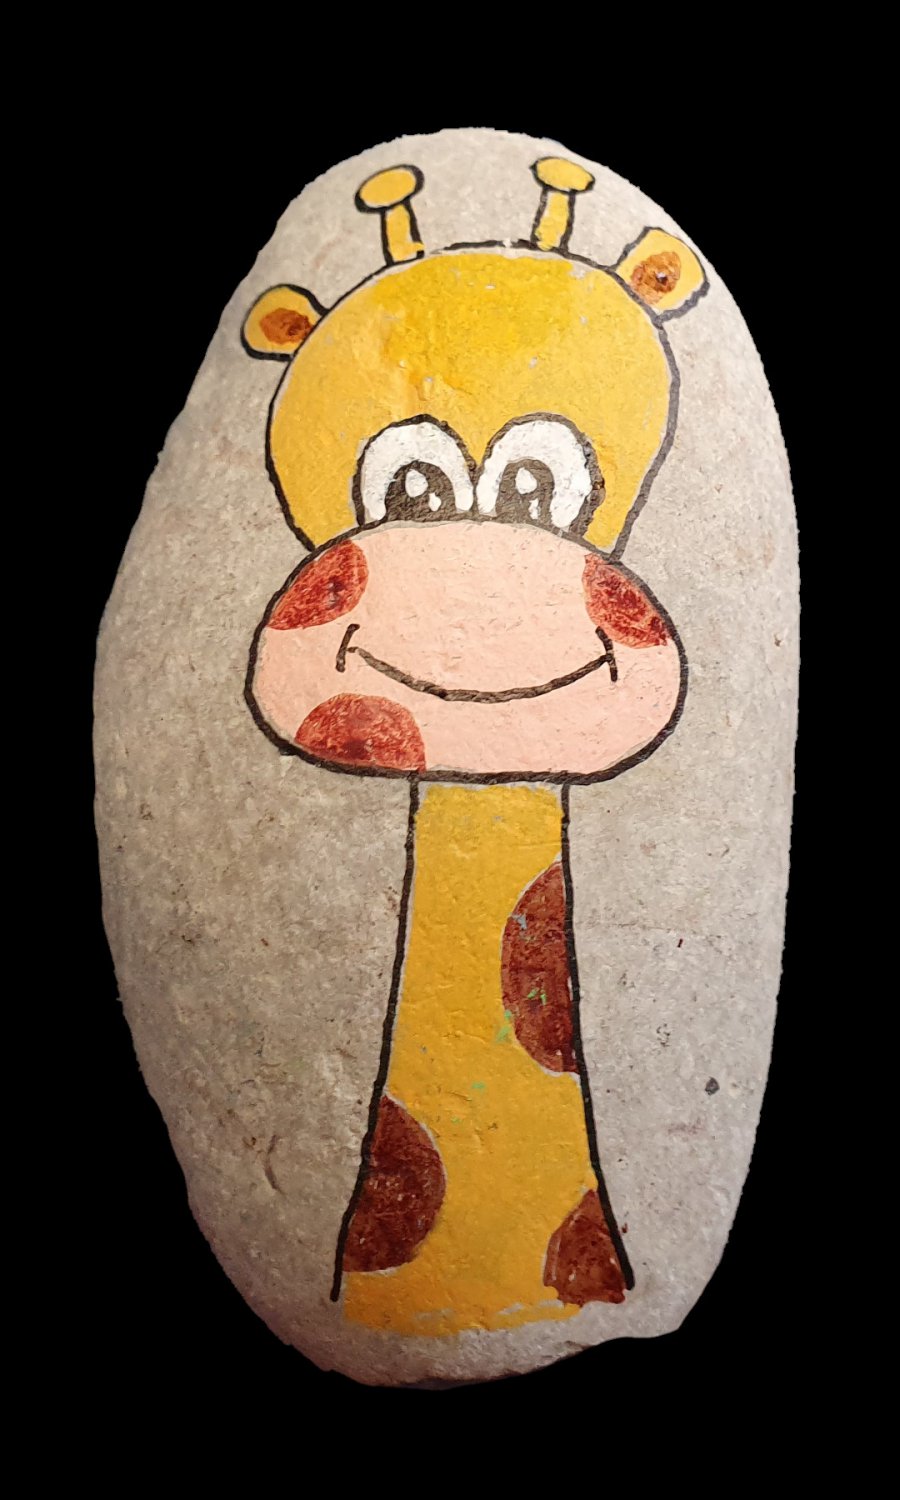 Rocks for kids Giraffe : let's play with painted rocks ! : 1632233125.girafe.jpg